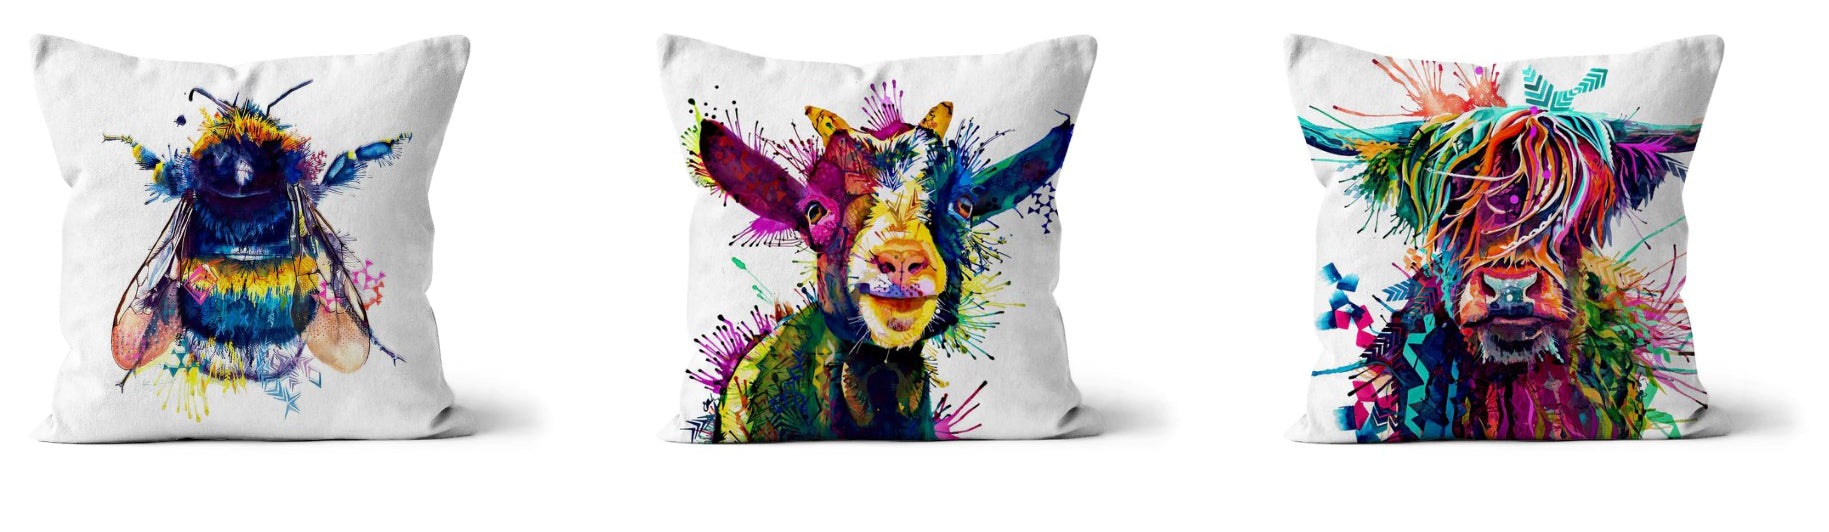 colourful animal cushions